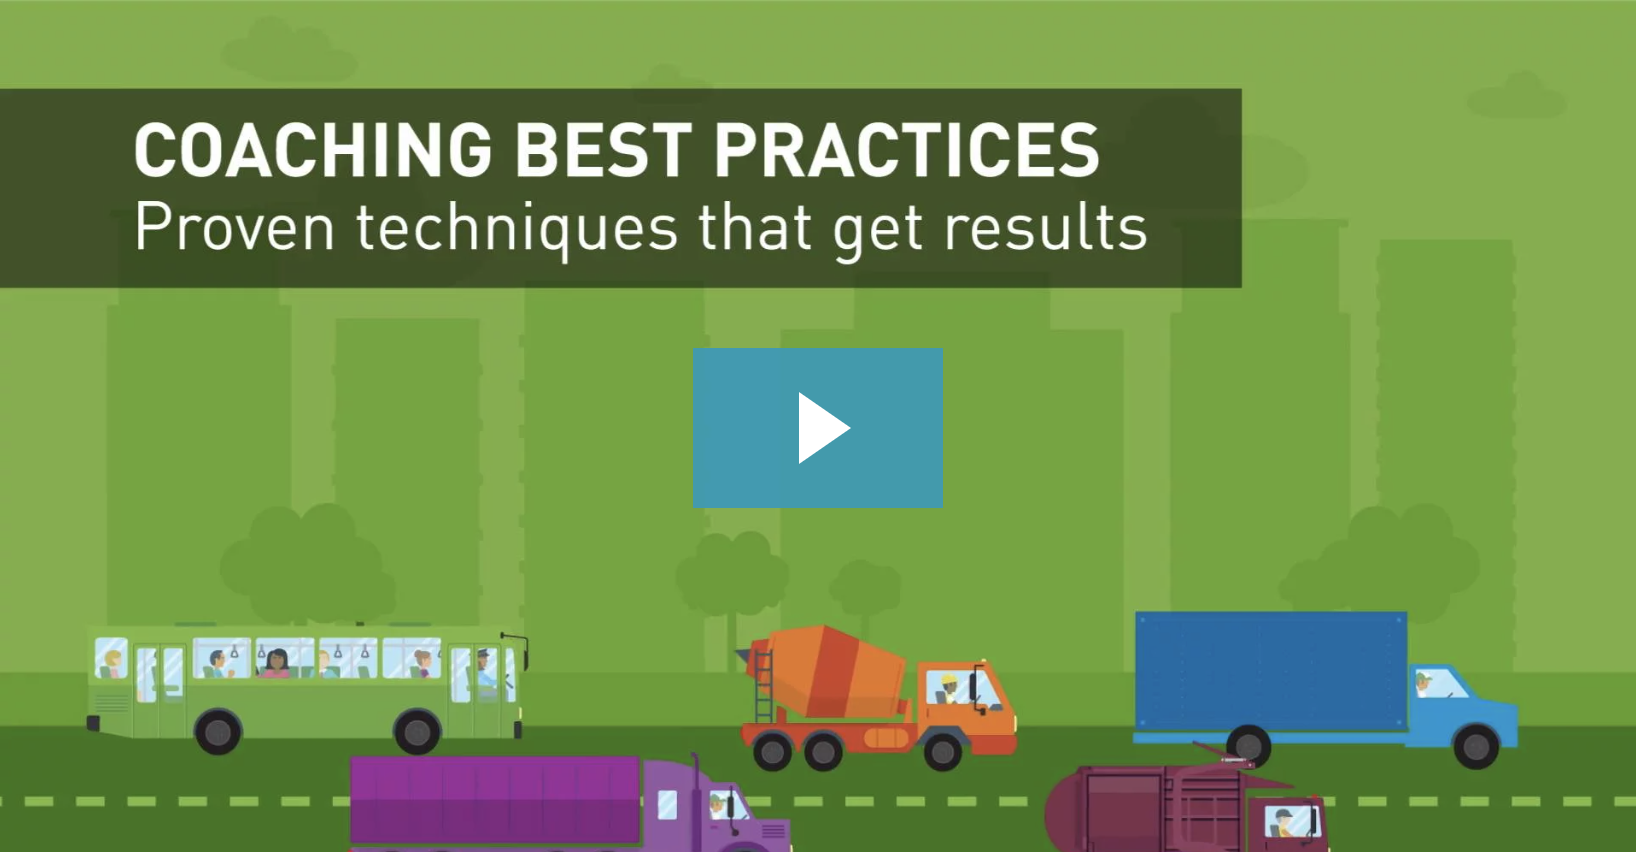 Video Coaching Best Practices